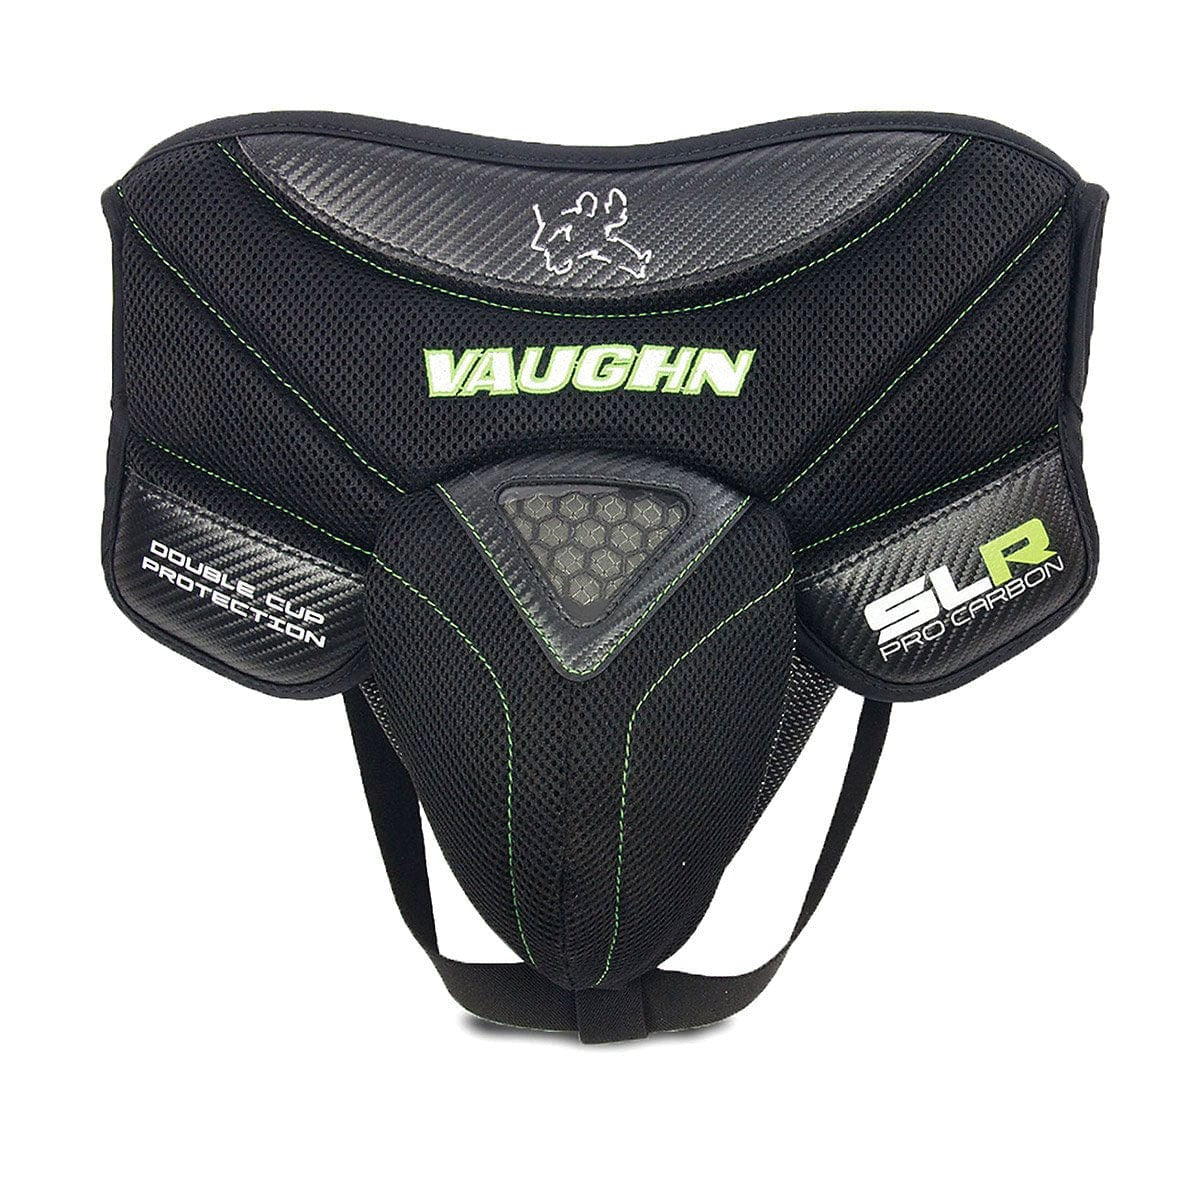 Vaughn Ventus SLR Pro Carbon Intermediate Goalie Jock